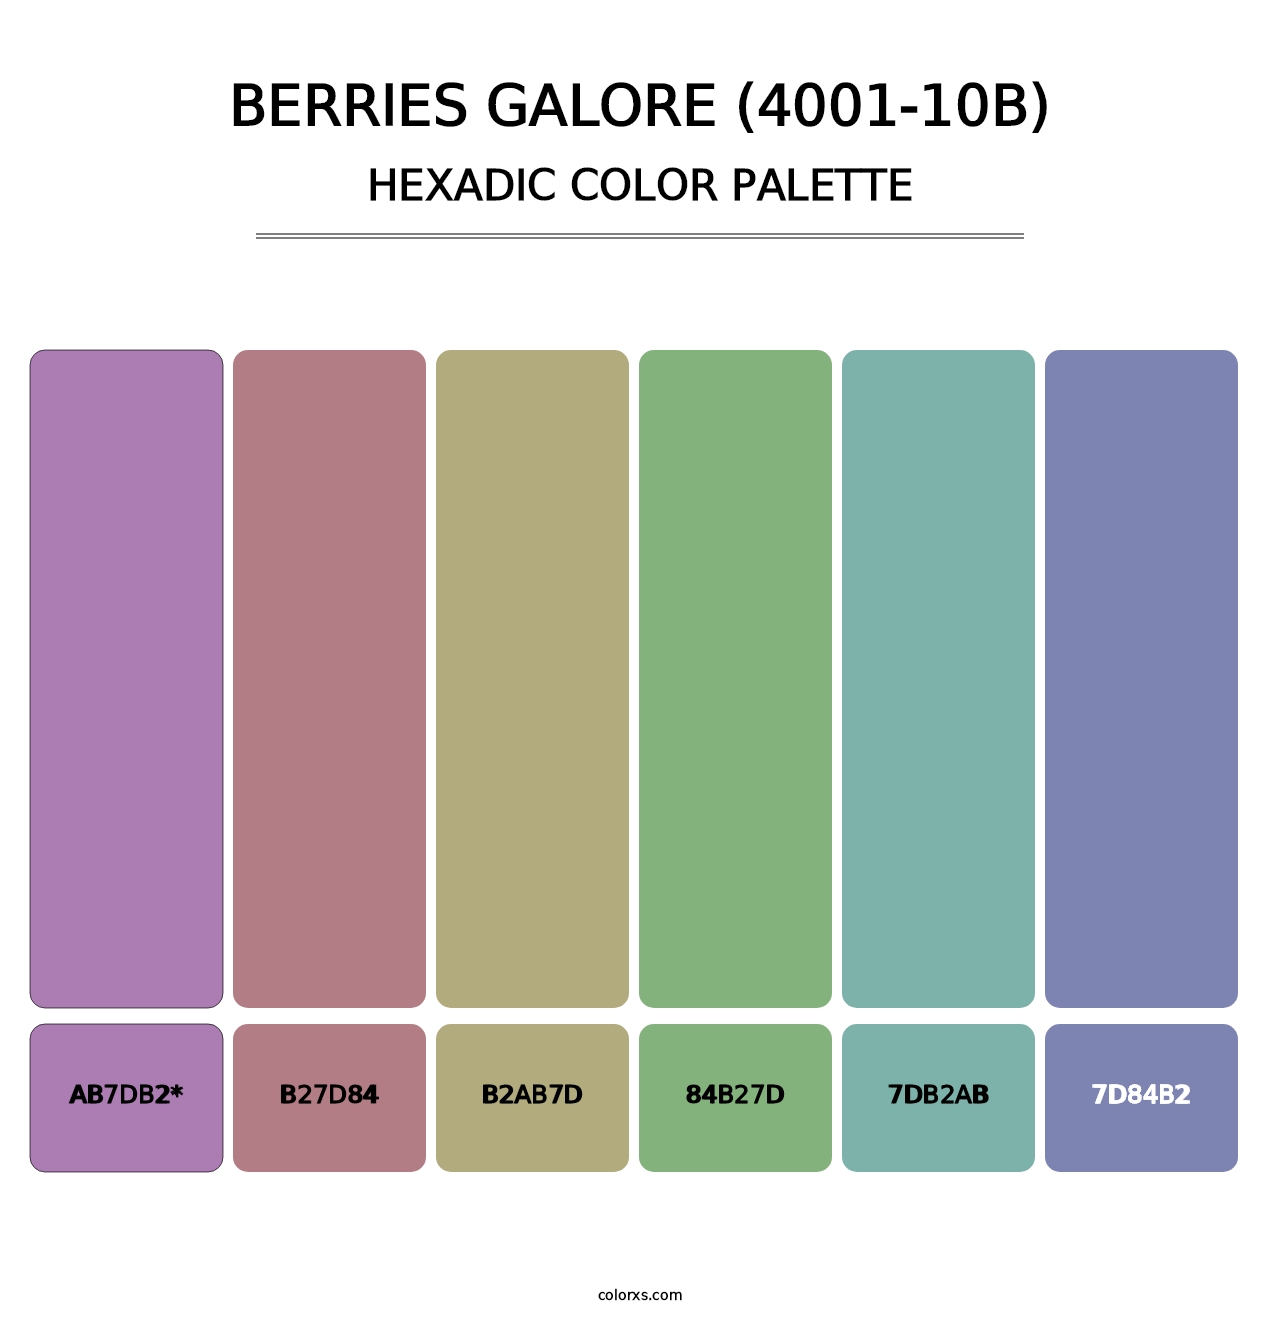 Berries Galore (4001-10B) - Hexadic Color Palette